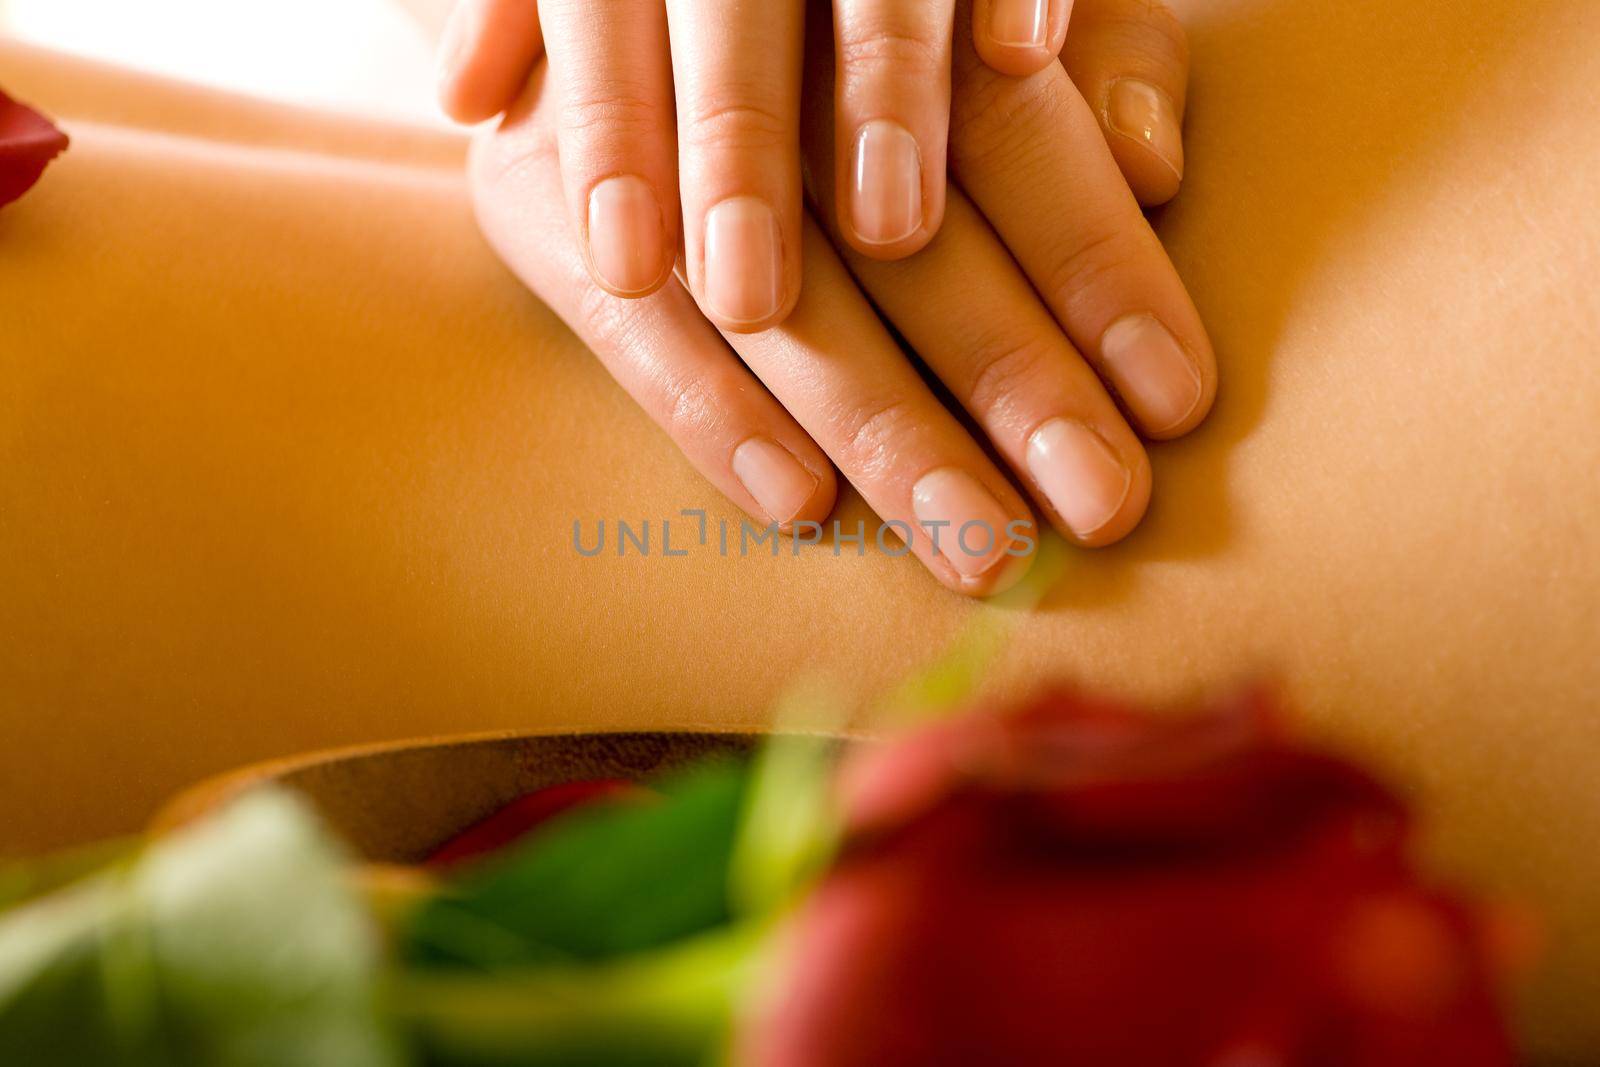 Woman enjoying a massage in a spa setting